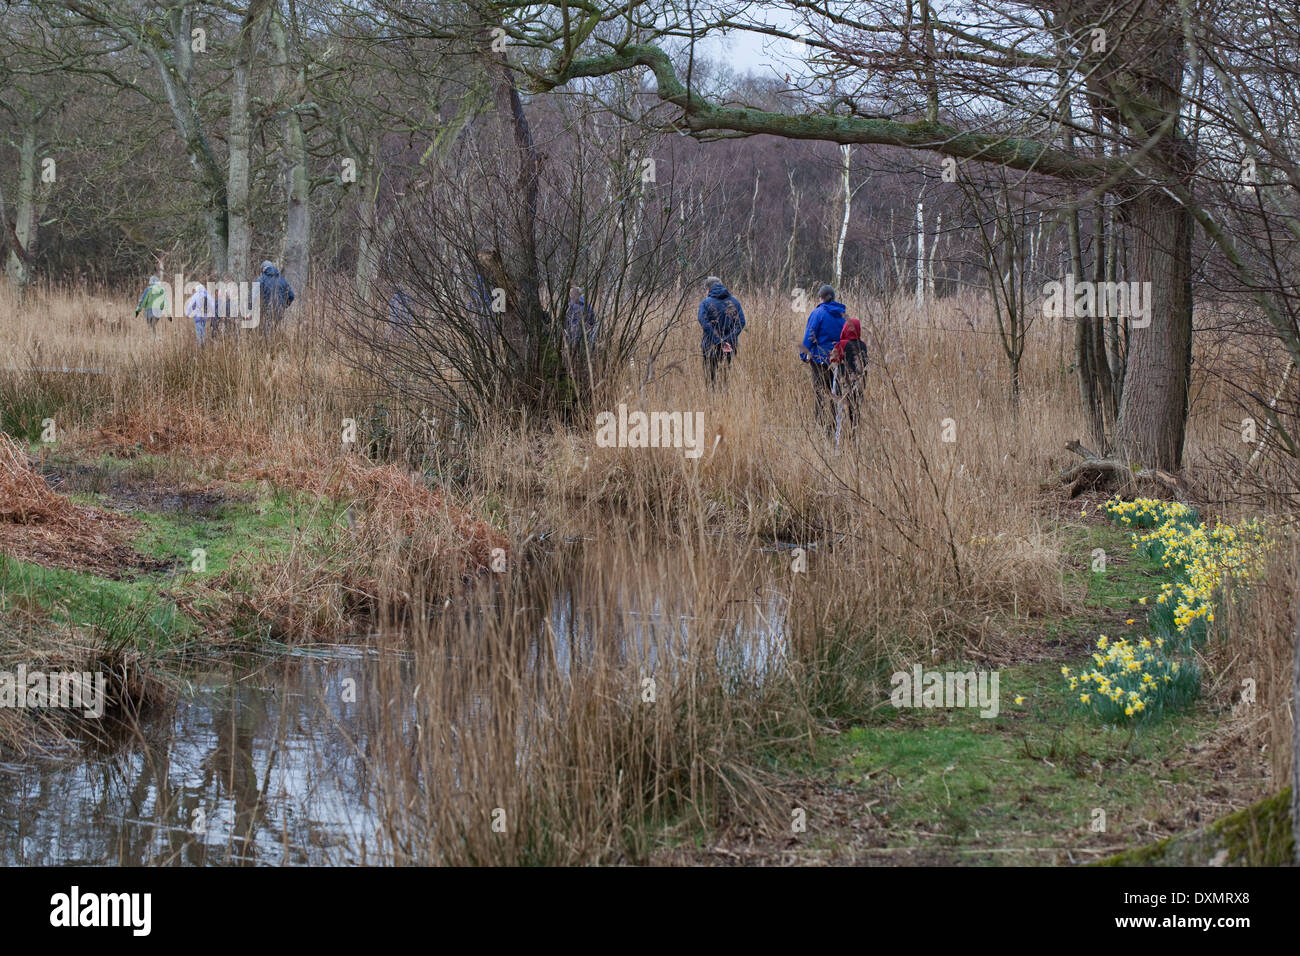 Dykeside walk. Recreational walkers. March. Spring. Broadland. Hickling. Norfolk. East Anglia. England. UK. Stock Photo